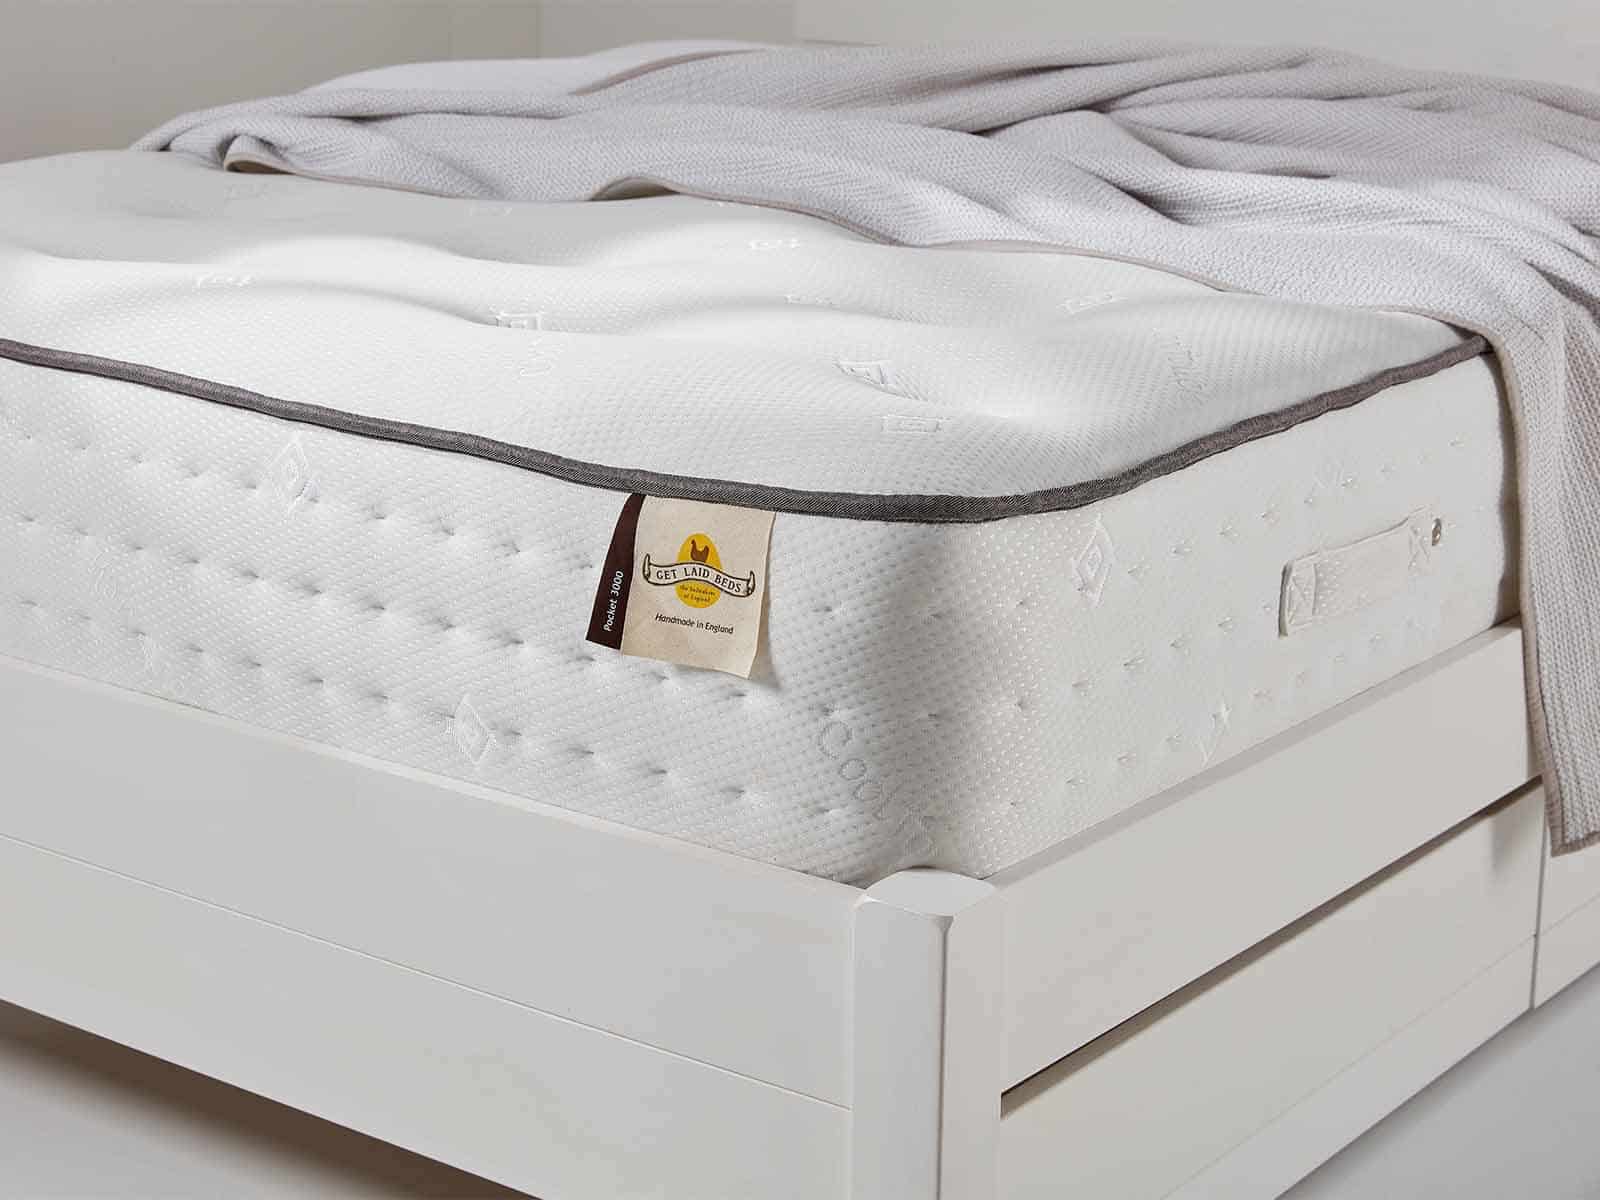 3000 washington pocket mattress review